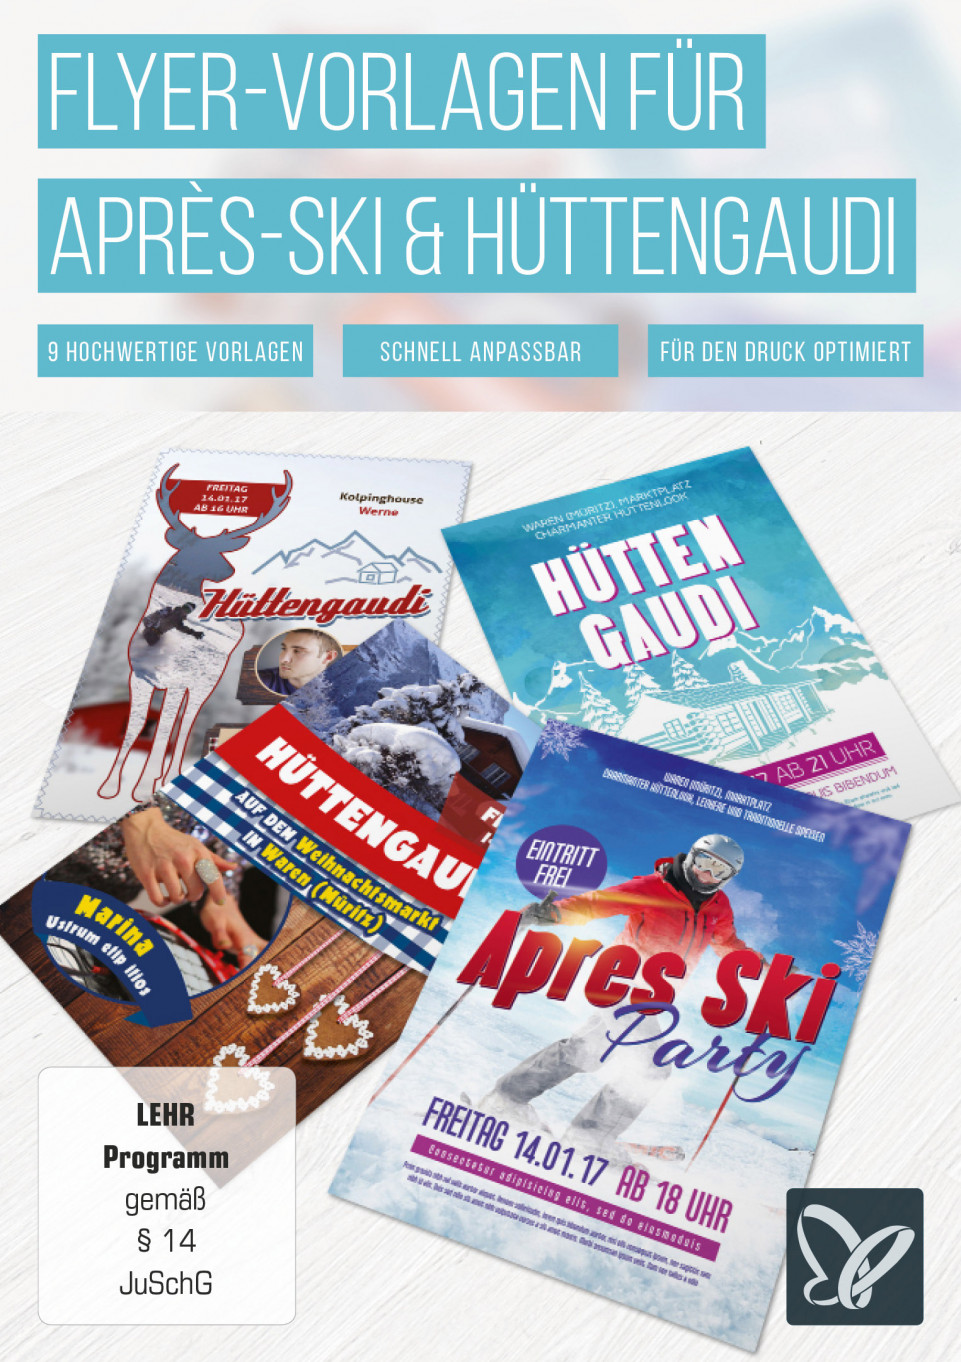 Flyer Vorlagen Fur Apres Ski Und Huttengaudi Tutkit Com